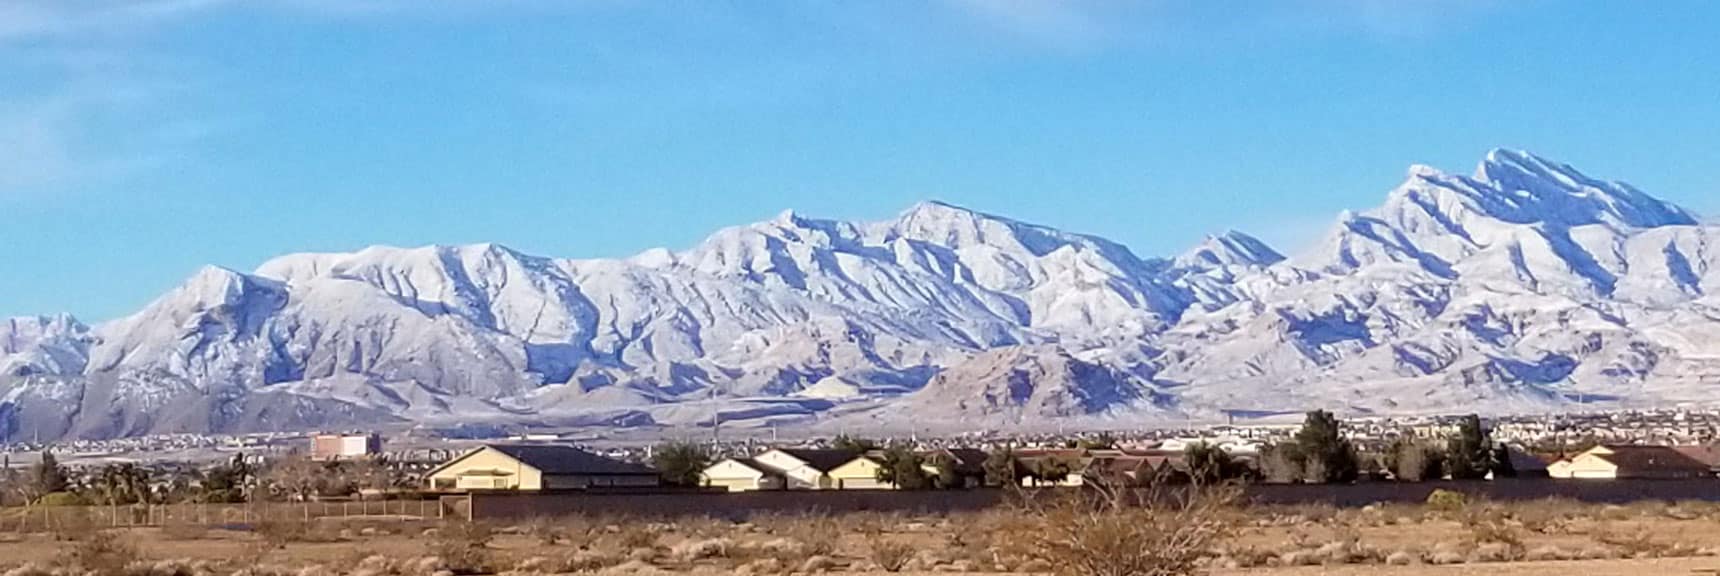 Damsel Peak Viewed from Centennial Hills in Las Vegas, Nevada